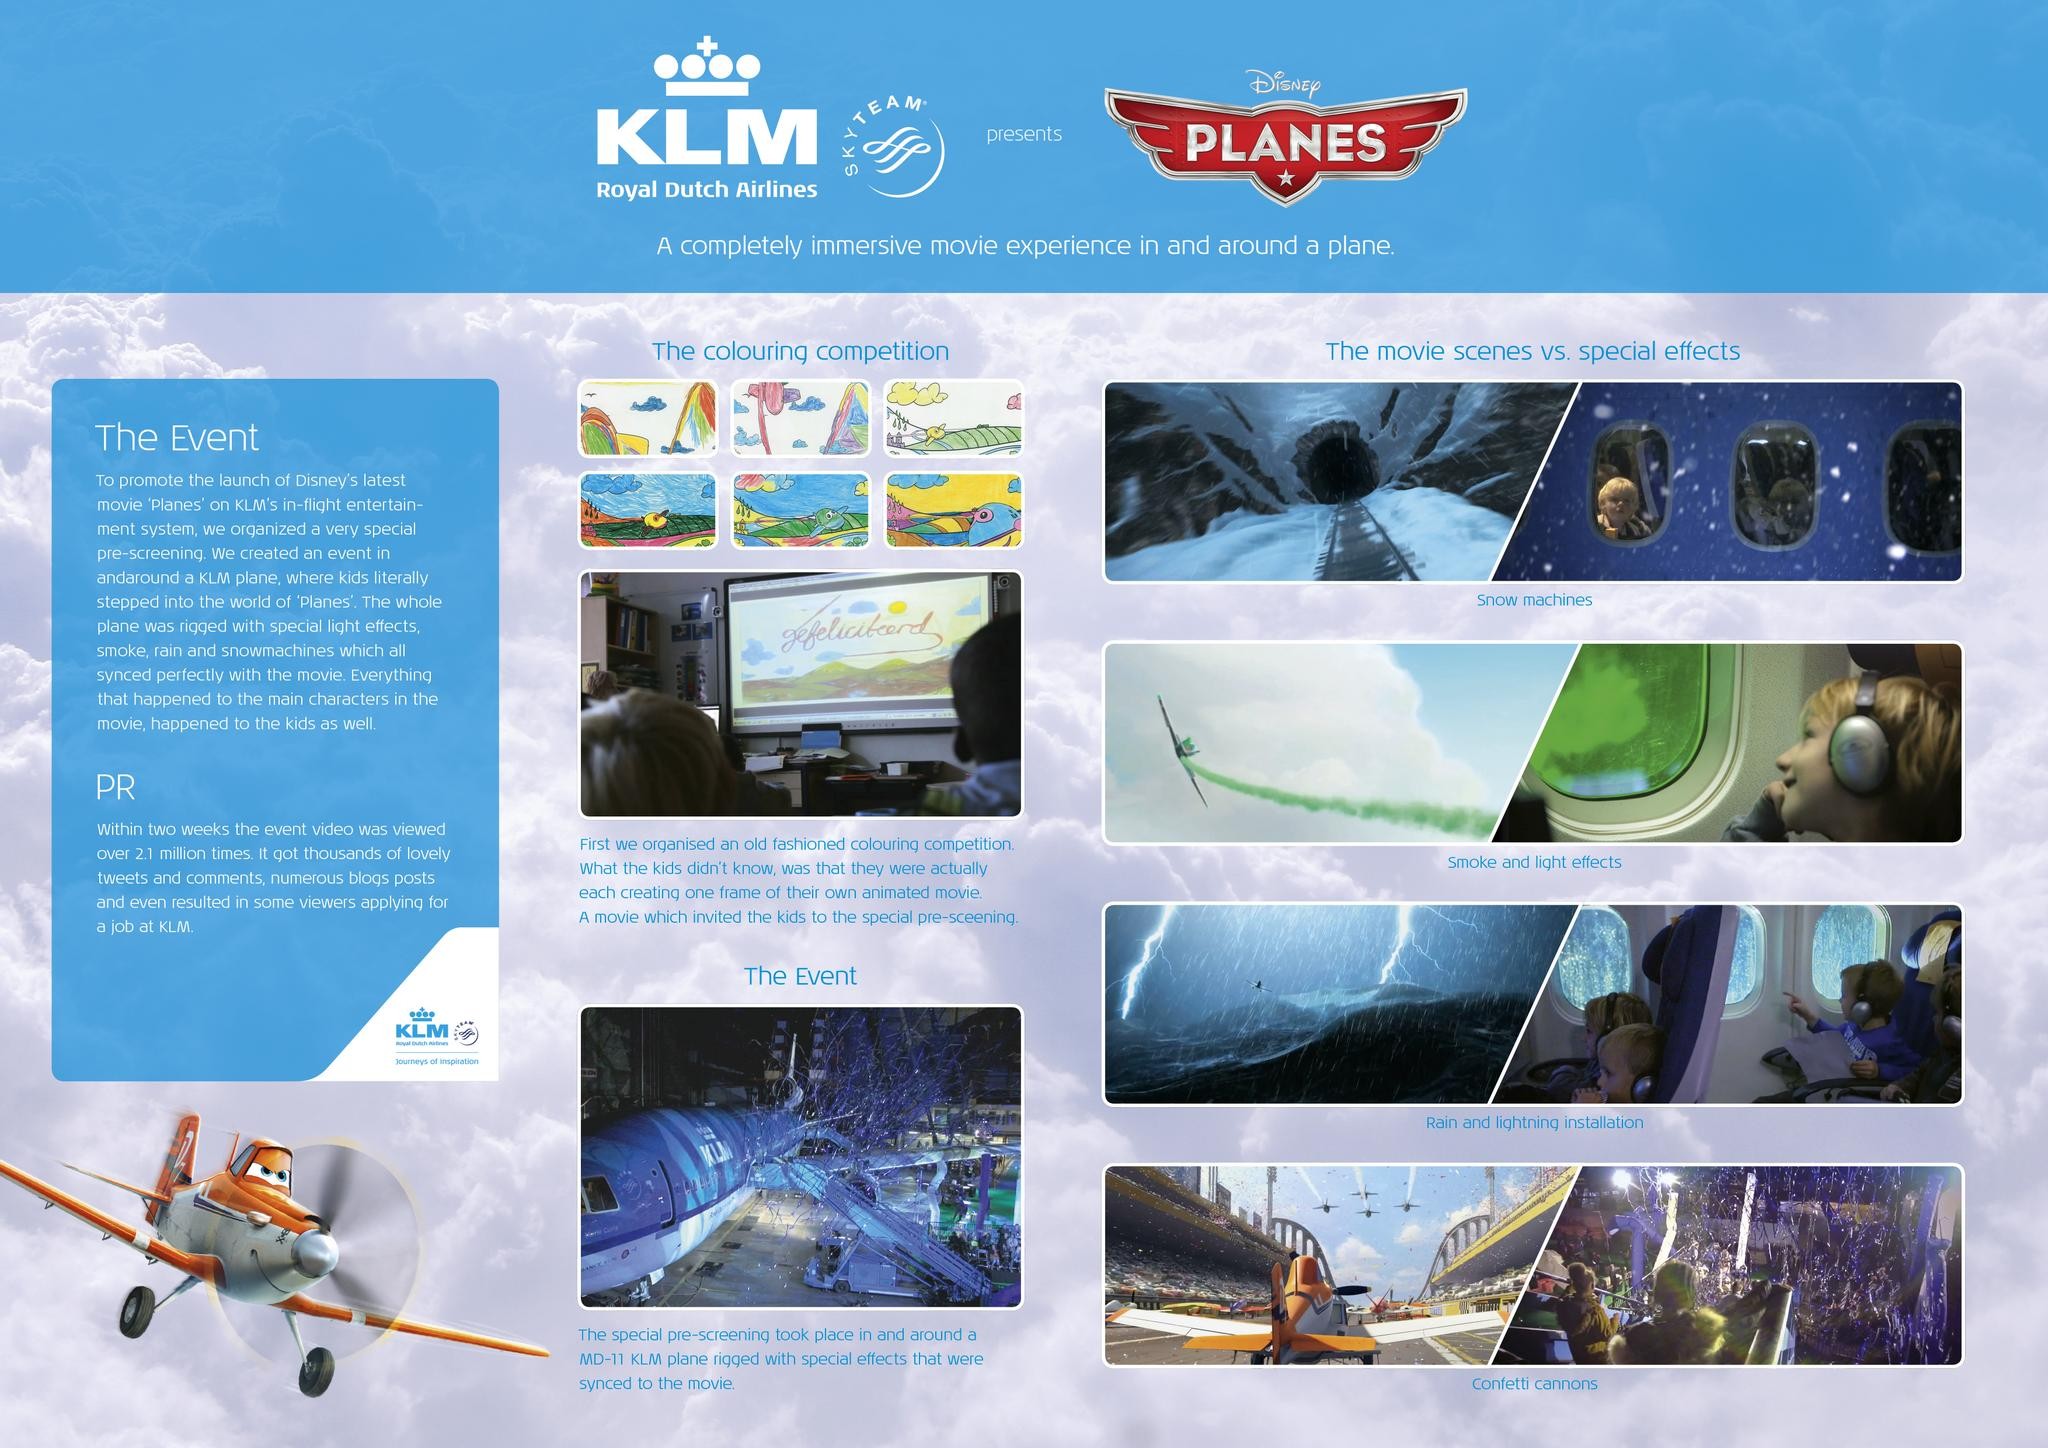 KLM PLANES